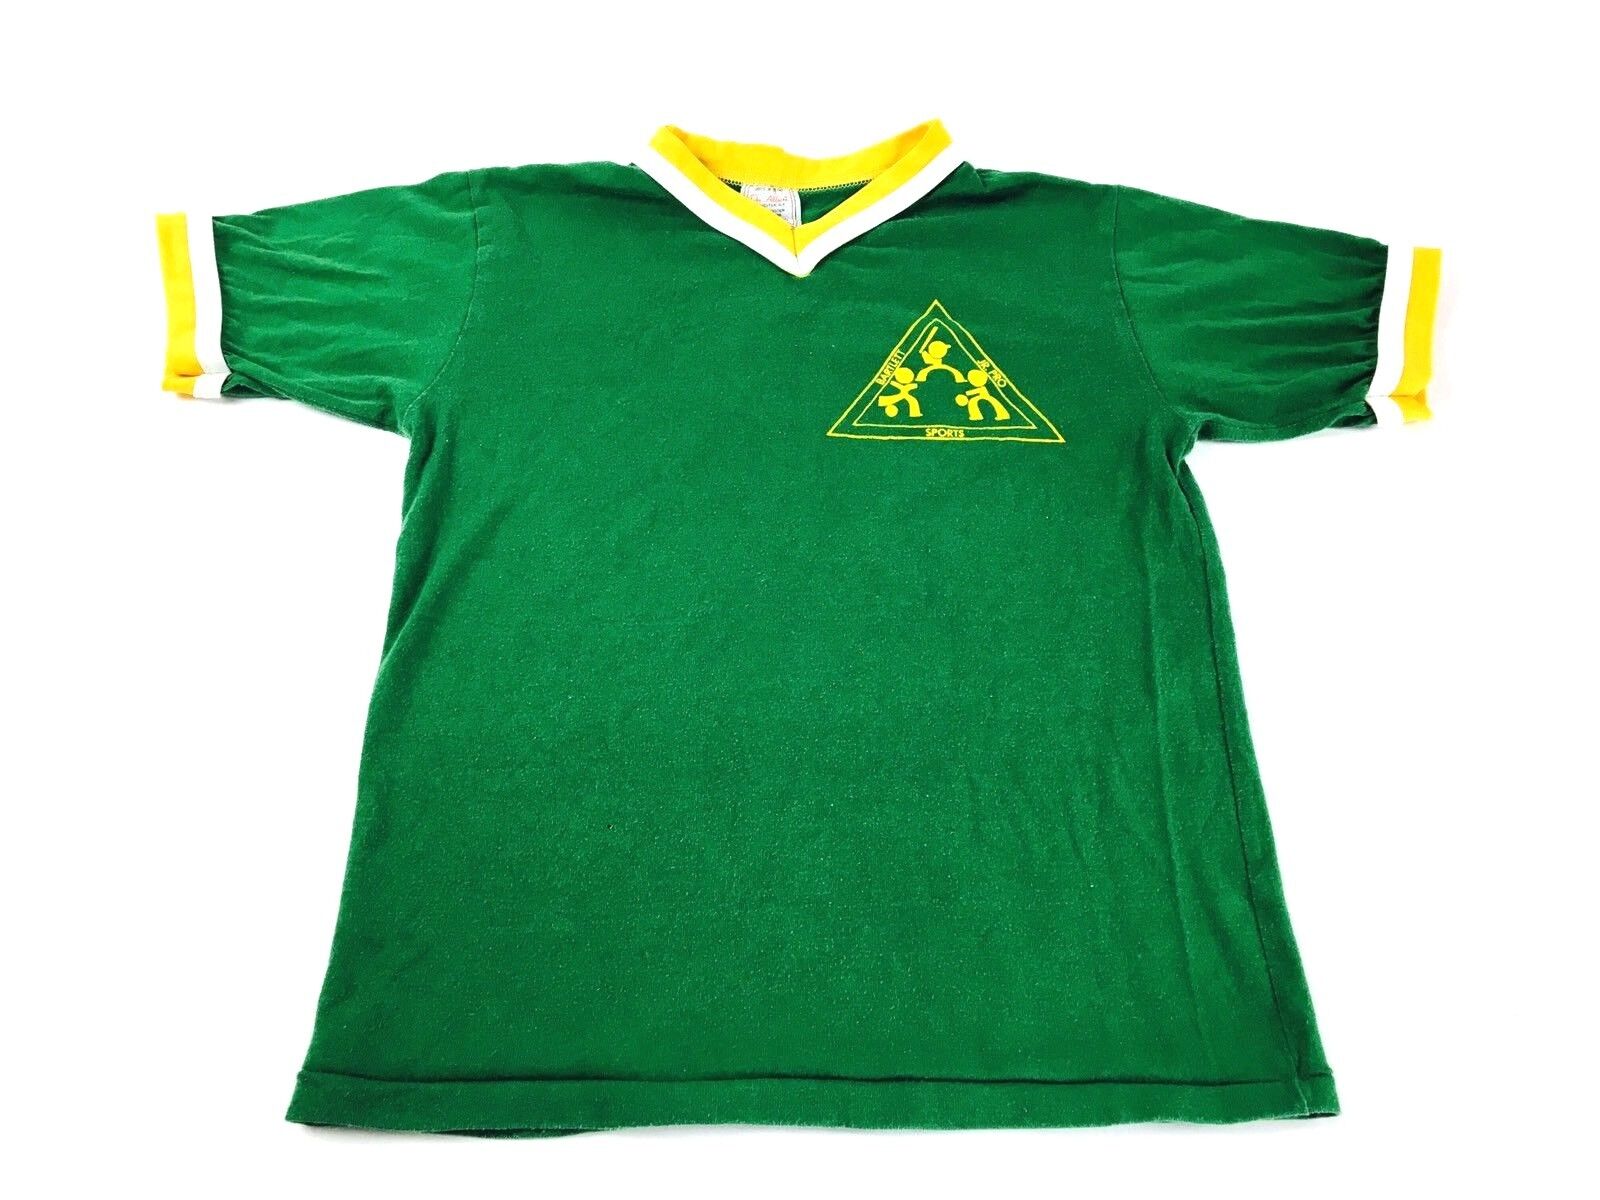 Vintage 1980s shirt Youth Sports Green Shirt #13 shirt 80s Tee Boho shirt Youth 